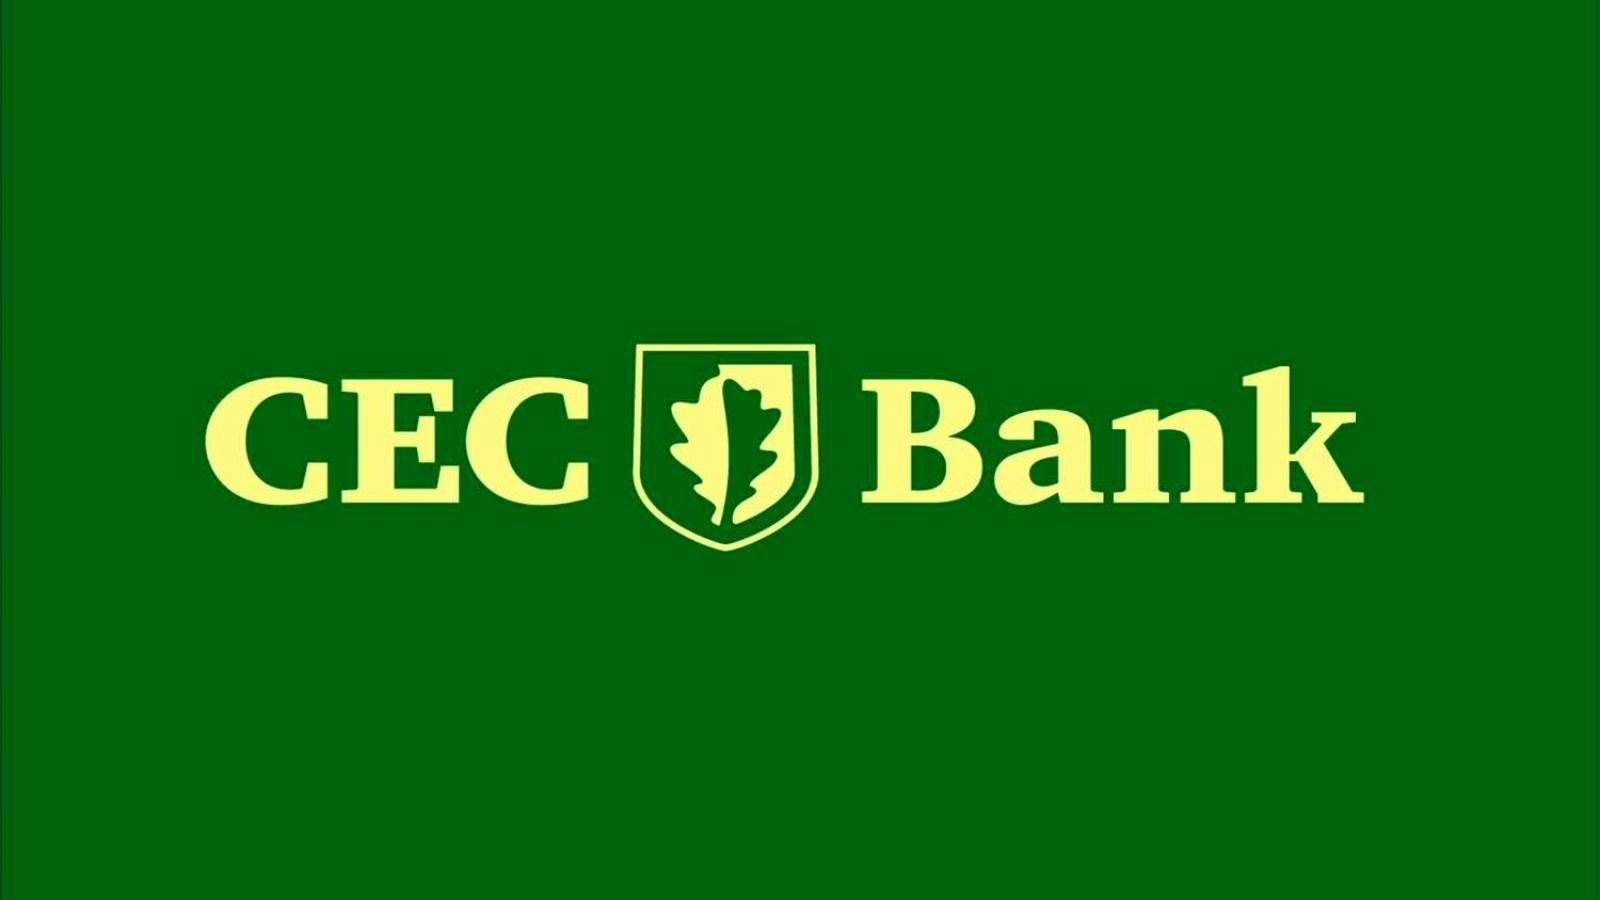 CEC Bank closure measure